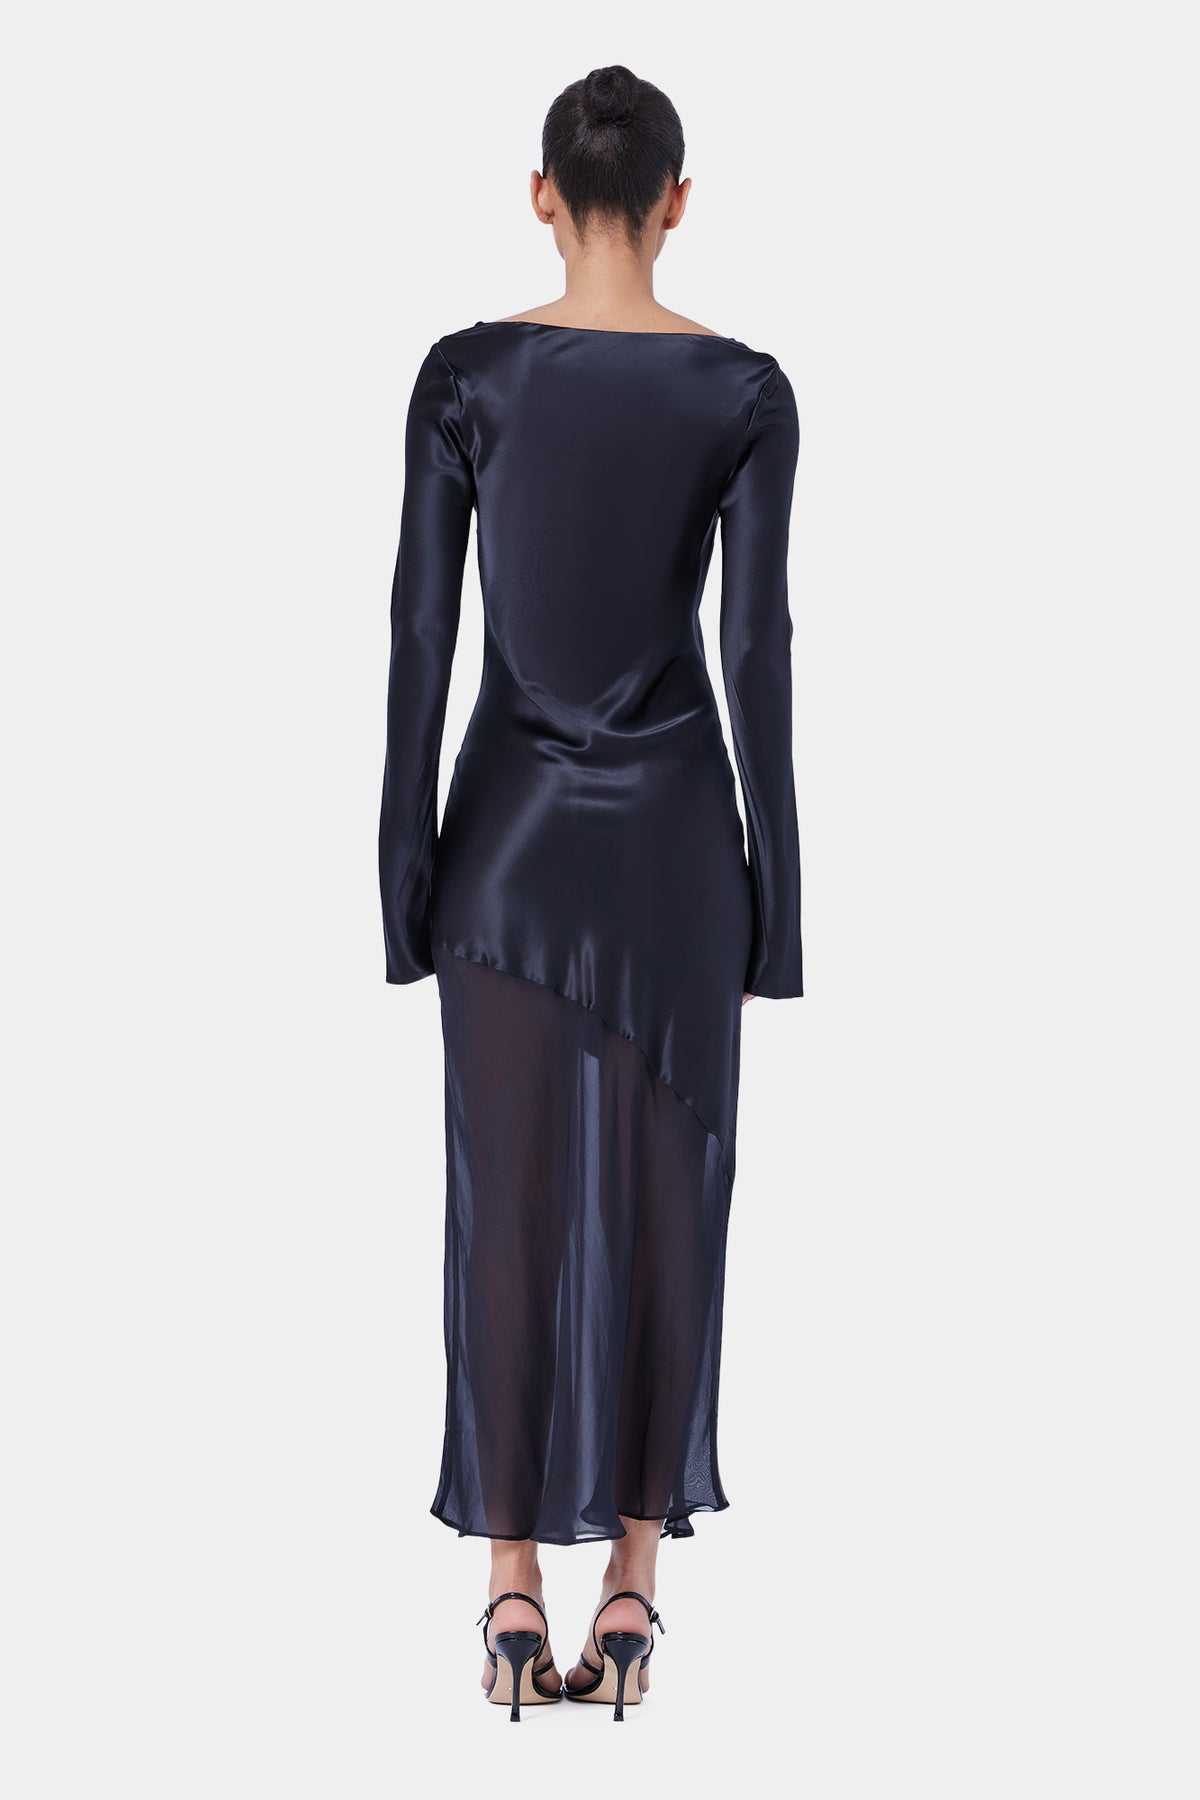 The Asym Splice LS Dress By GINIA In Black